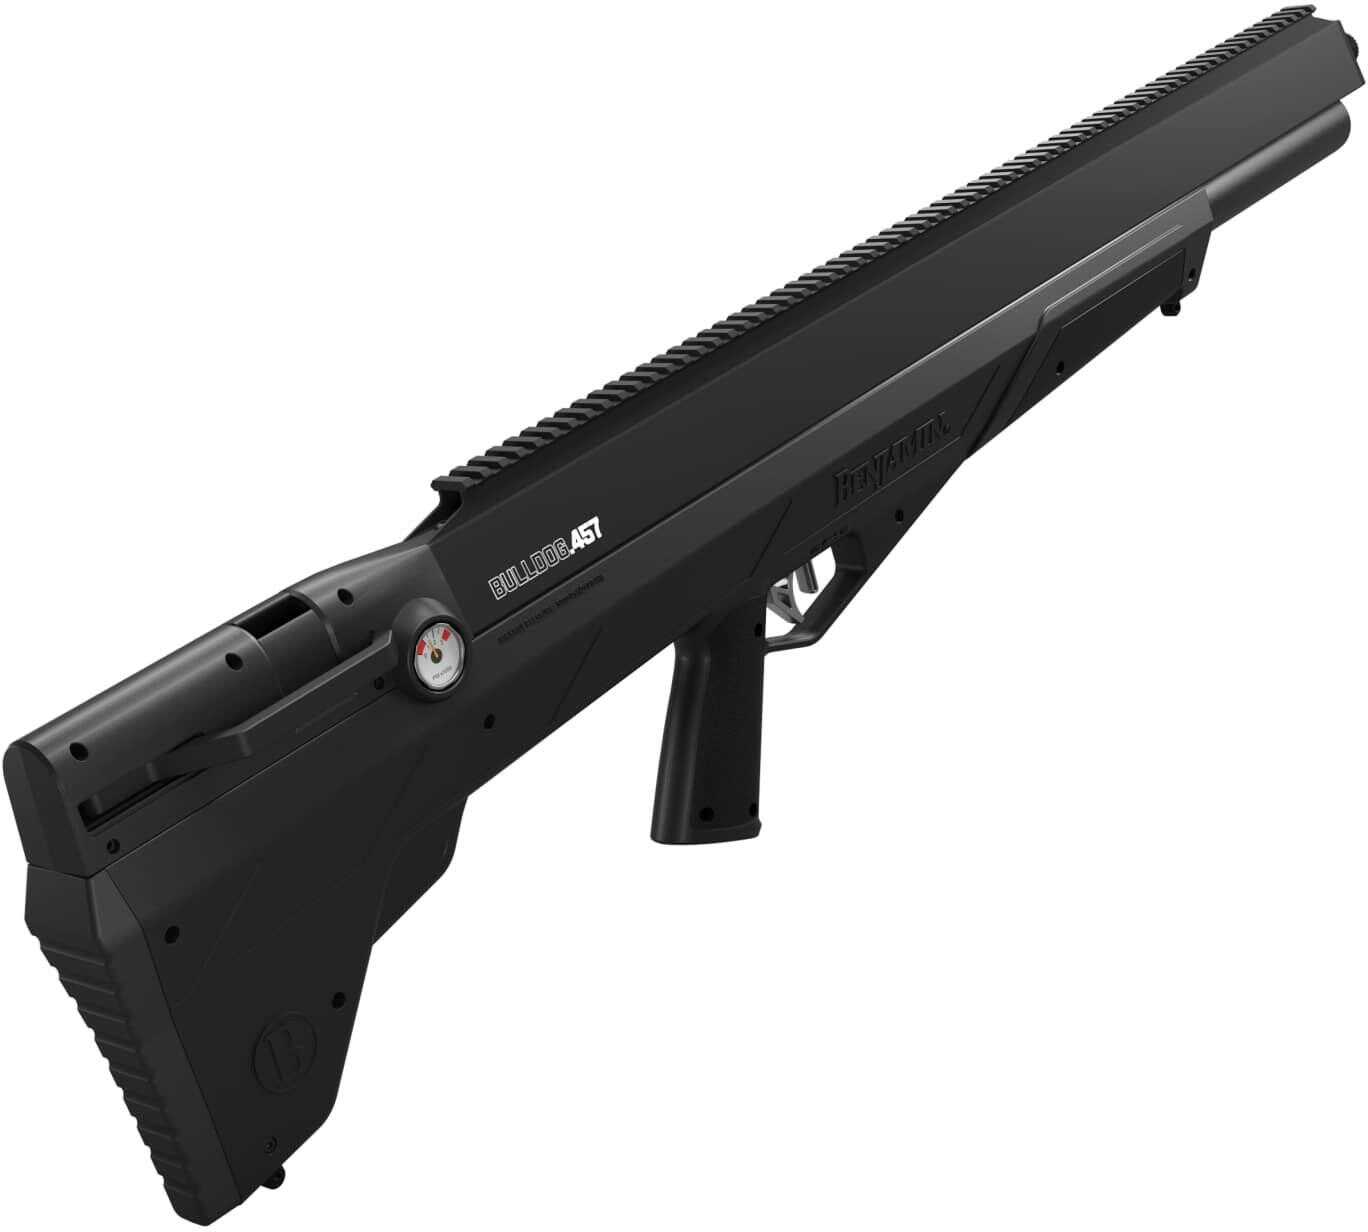 Crosman Bpbd4s Bulldog Hunting Air Rifle Powered By Pcp 457 Pellet Caliber With 5rd Capacity Black Metal Finish &